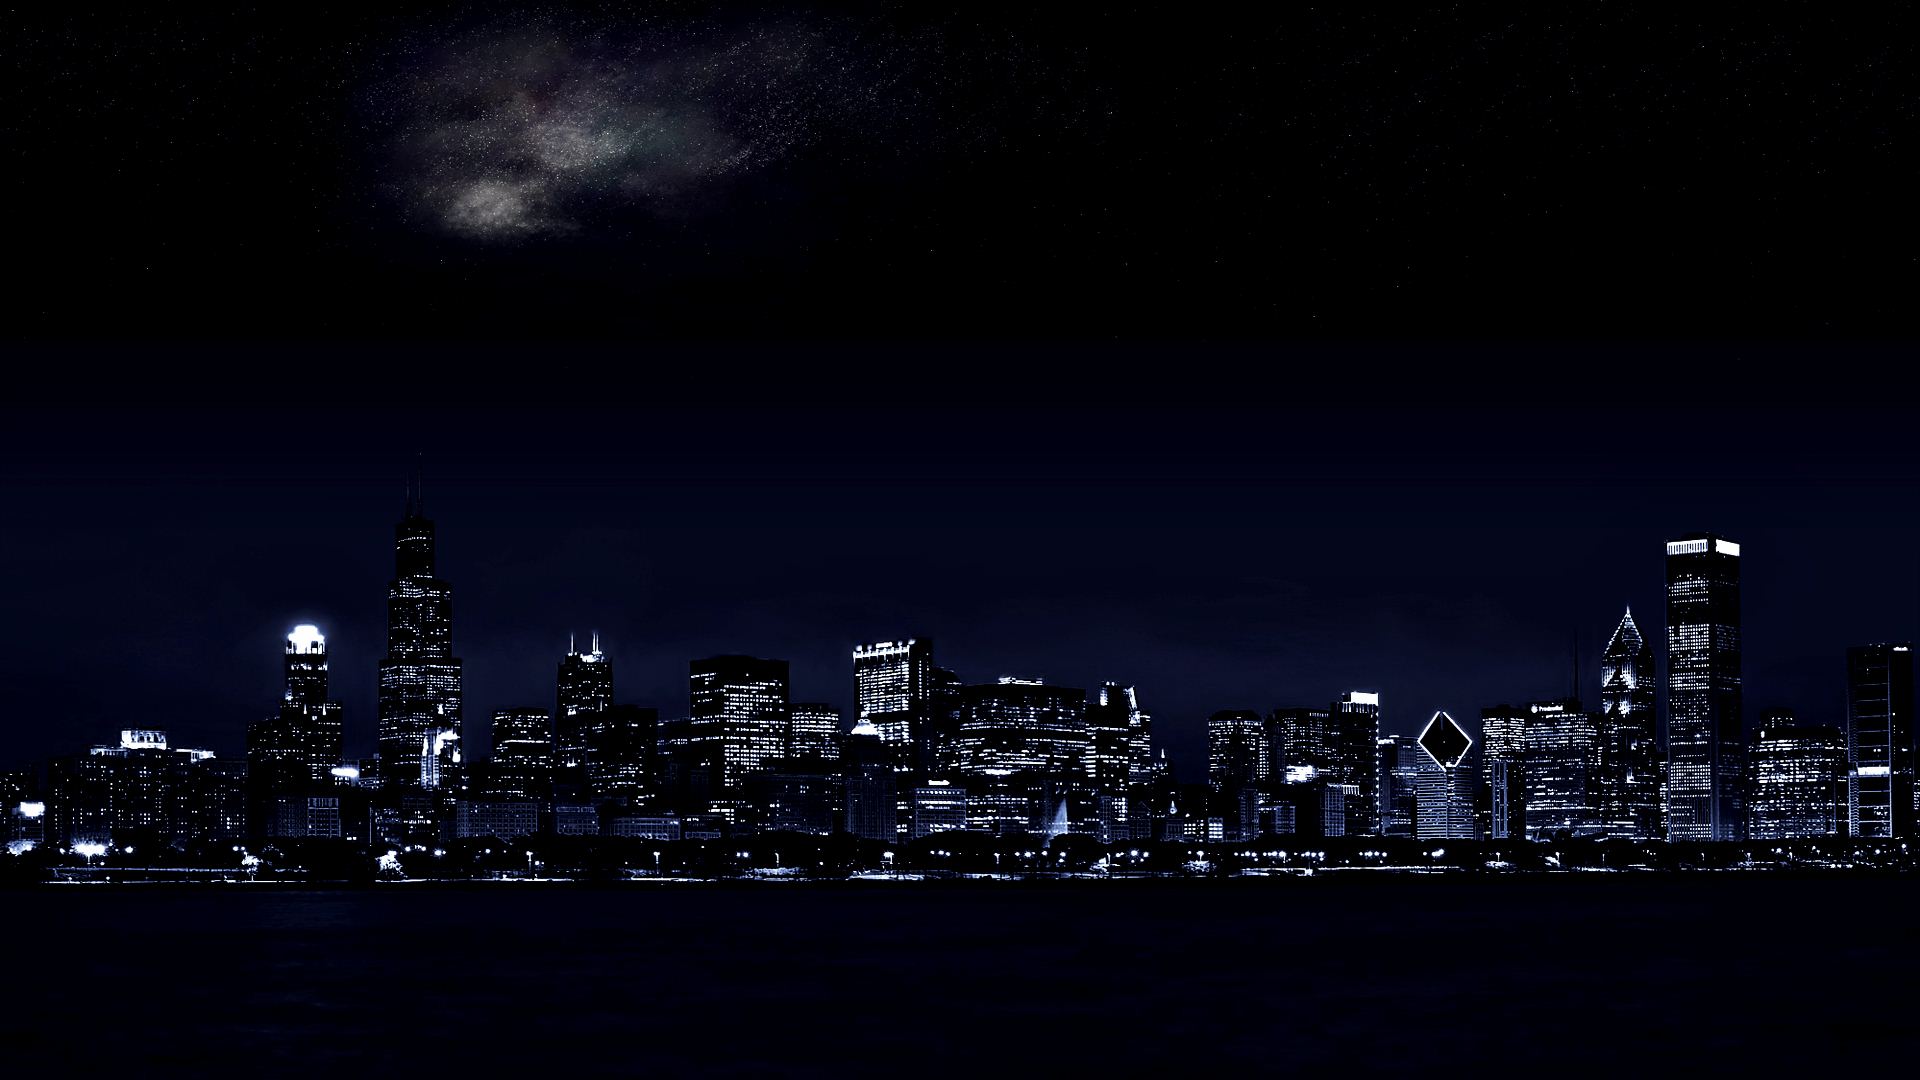 Dark City HD Wallpaper Image Pictures